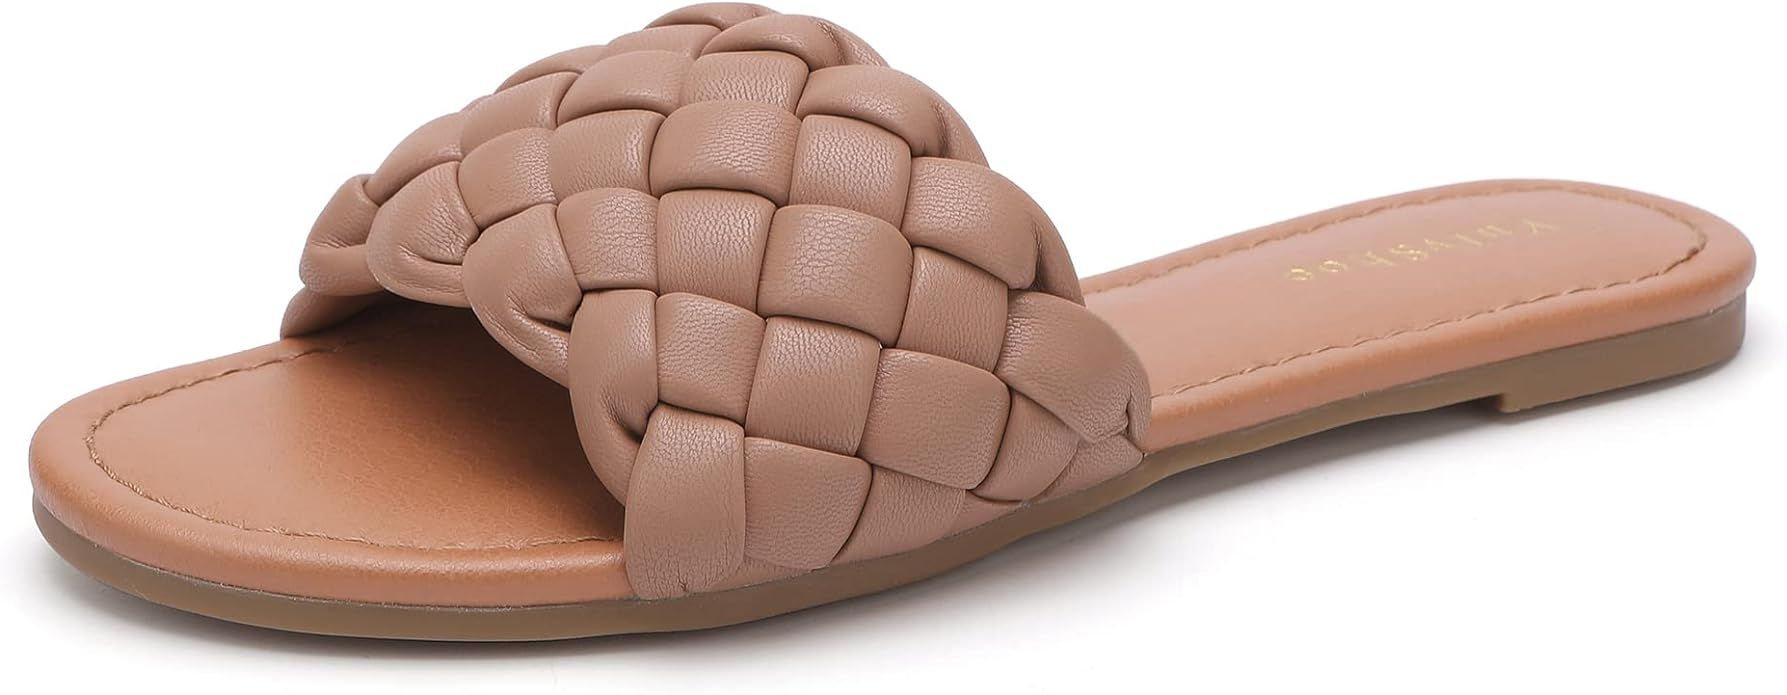 YULVSHOE Women's Braided Flat Sandals Fashion Woven Open Toe Slip On Slides Strappy Beach Sandals... | Amazon (US)